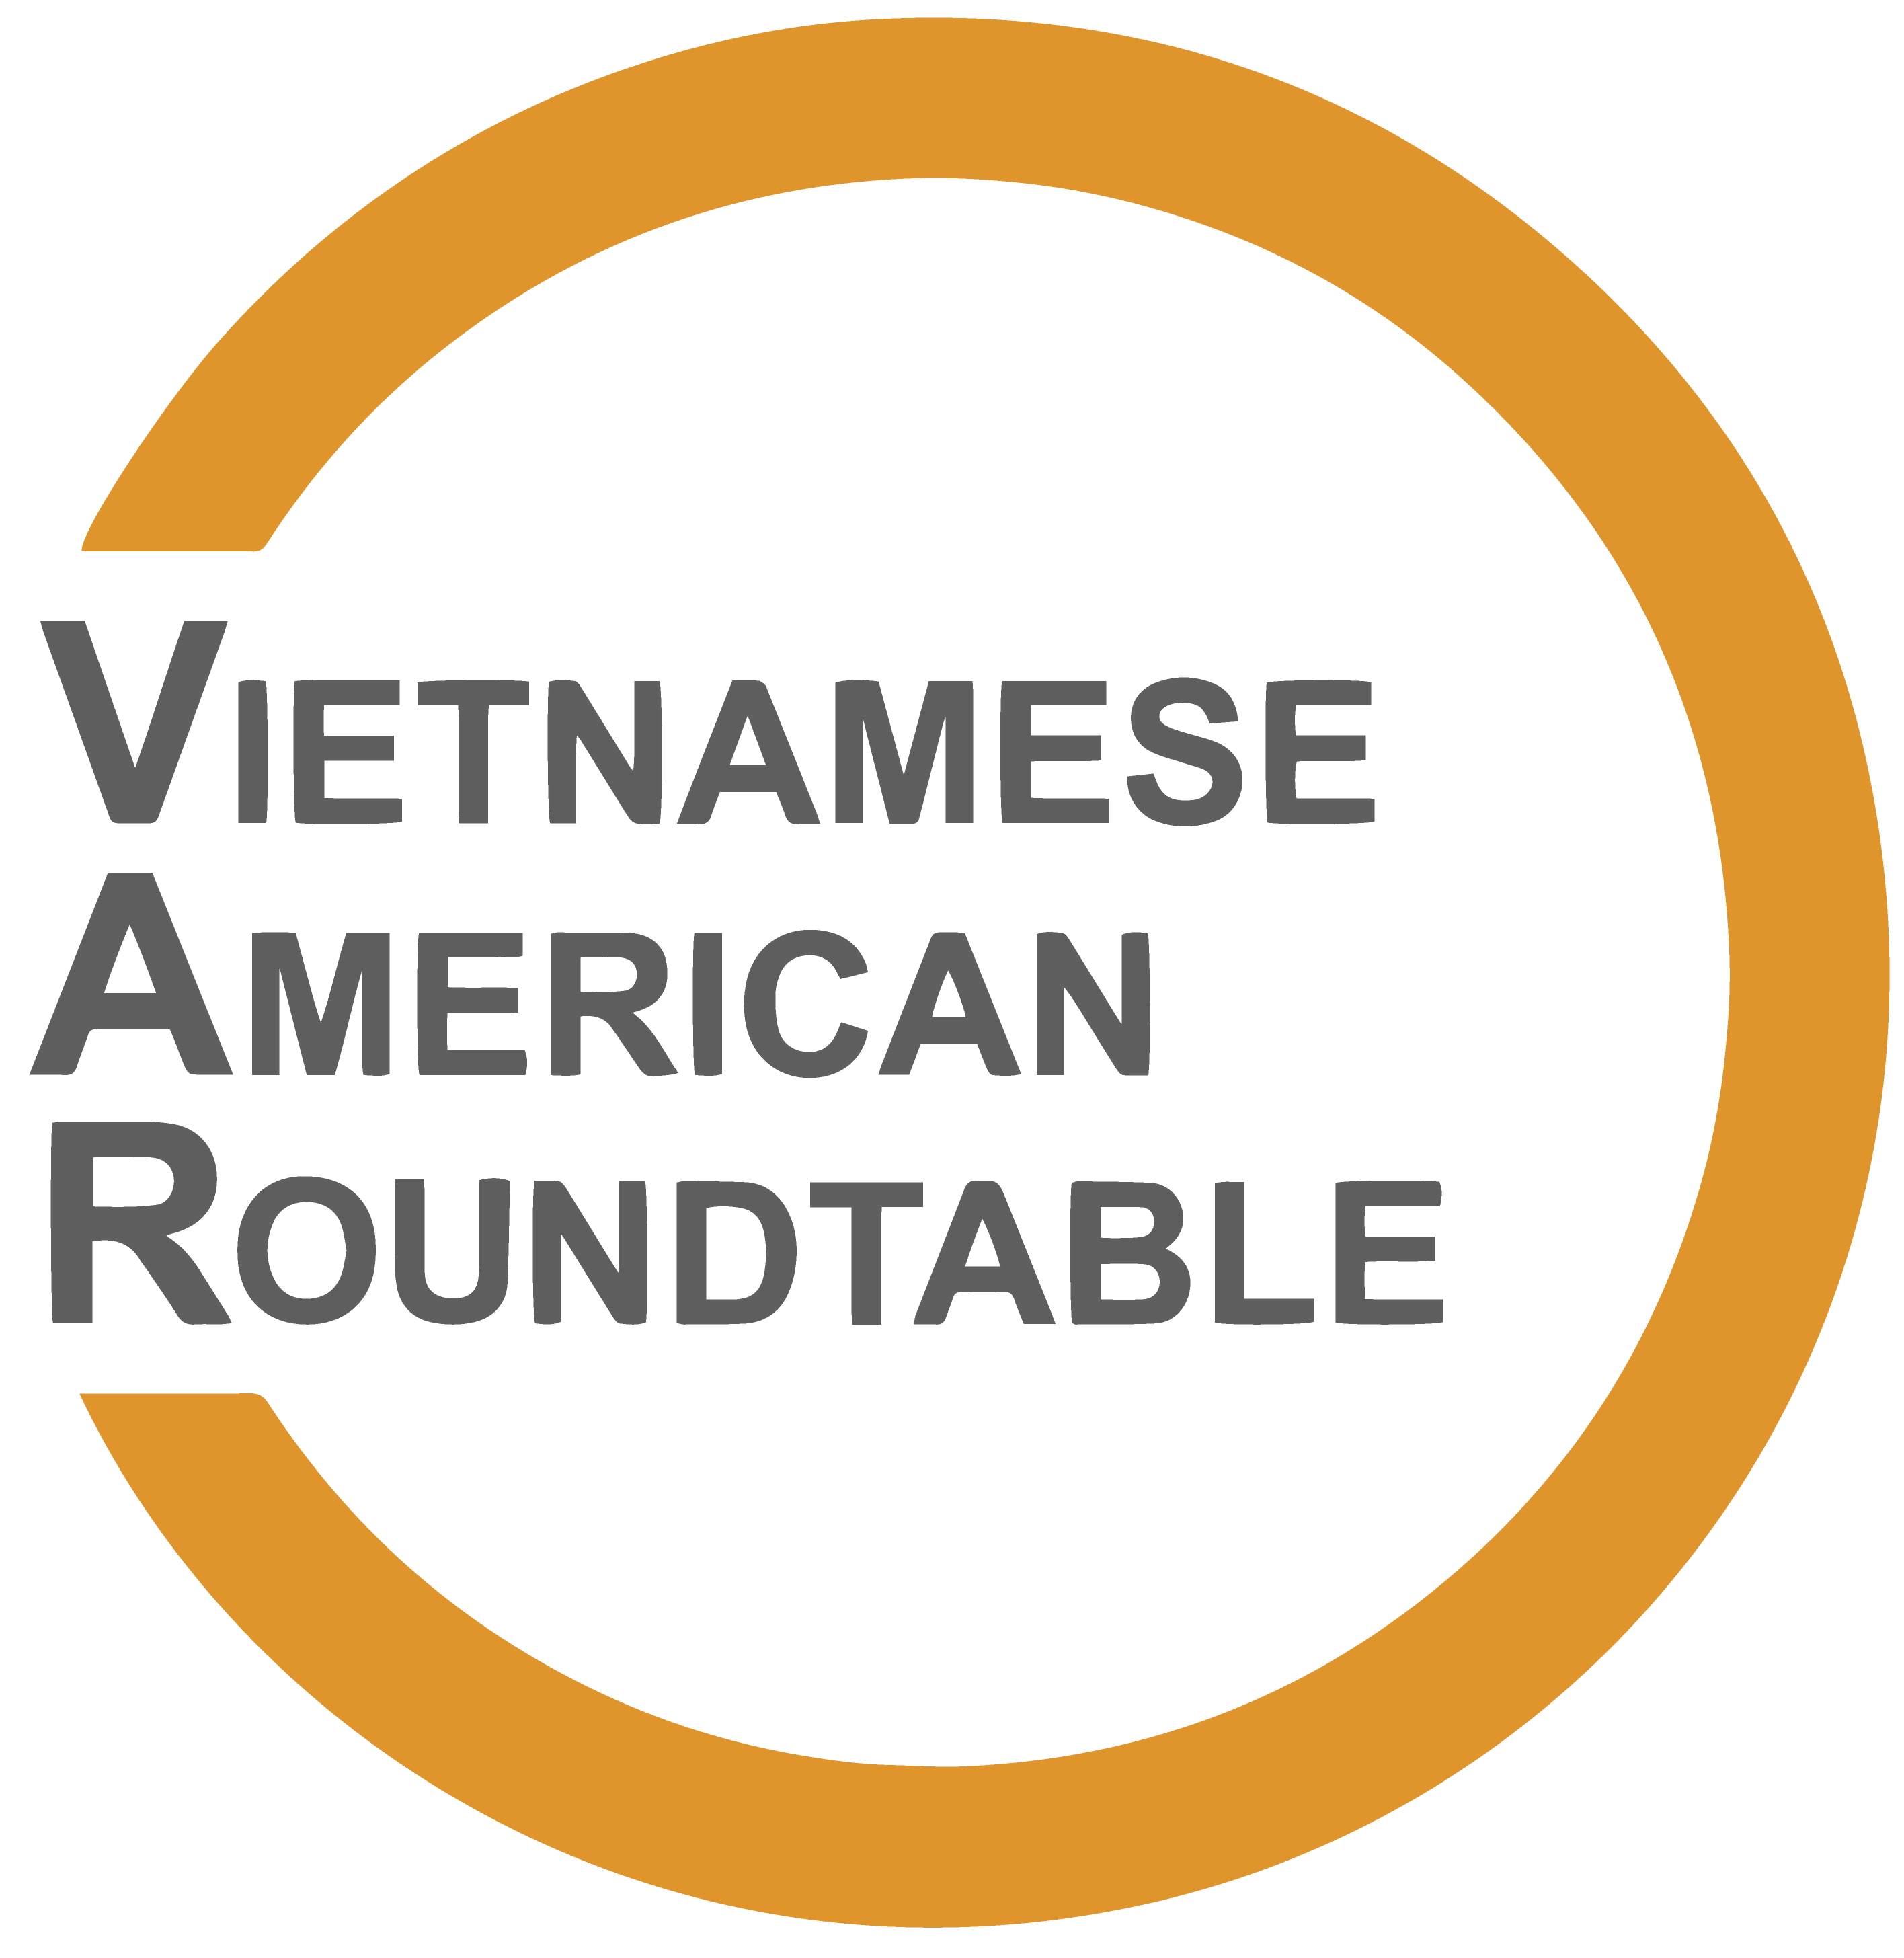 vietnamese american round table